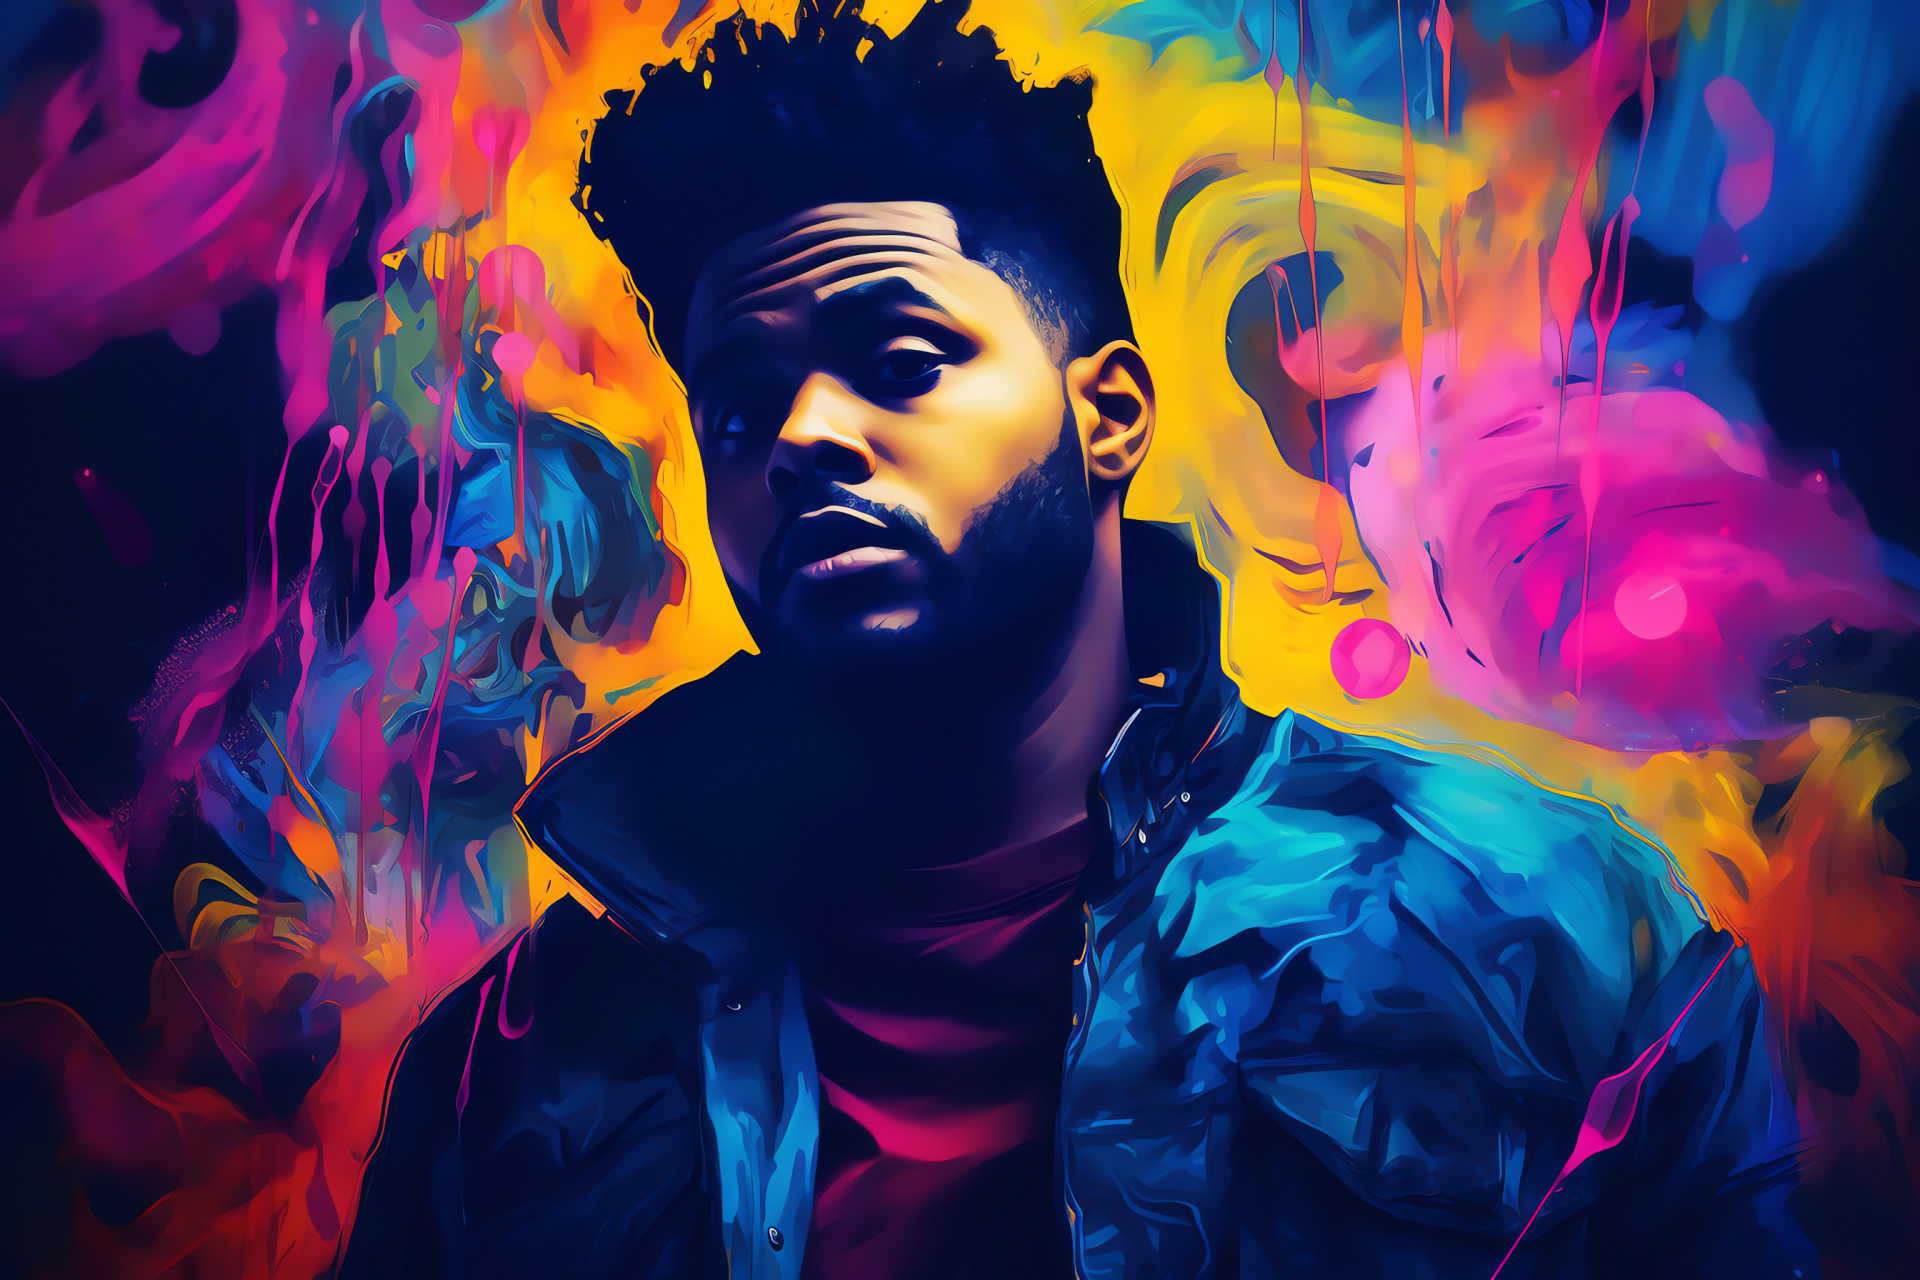 The Weeknd, Surreal environment, Artist in fantasy, Digital artistry, Hypnotic patterns, HD Desktop Image